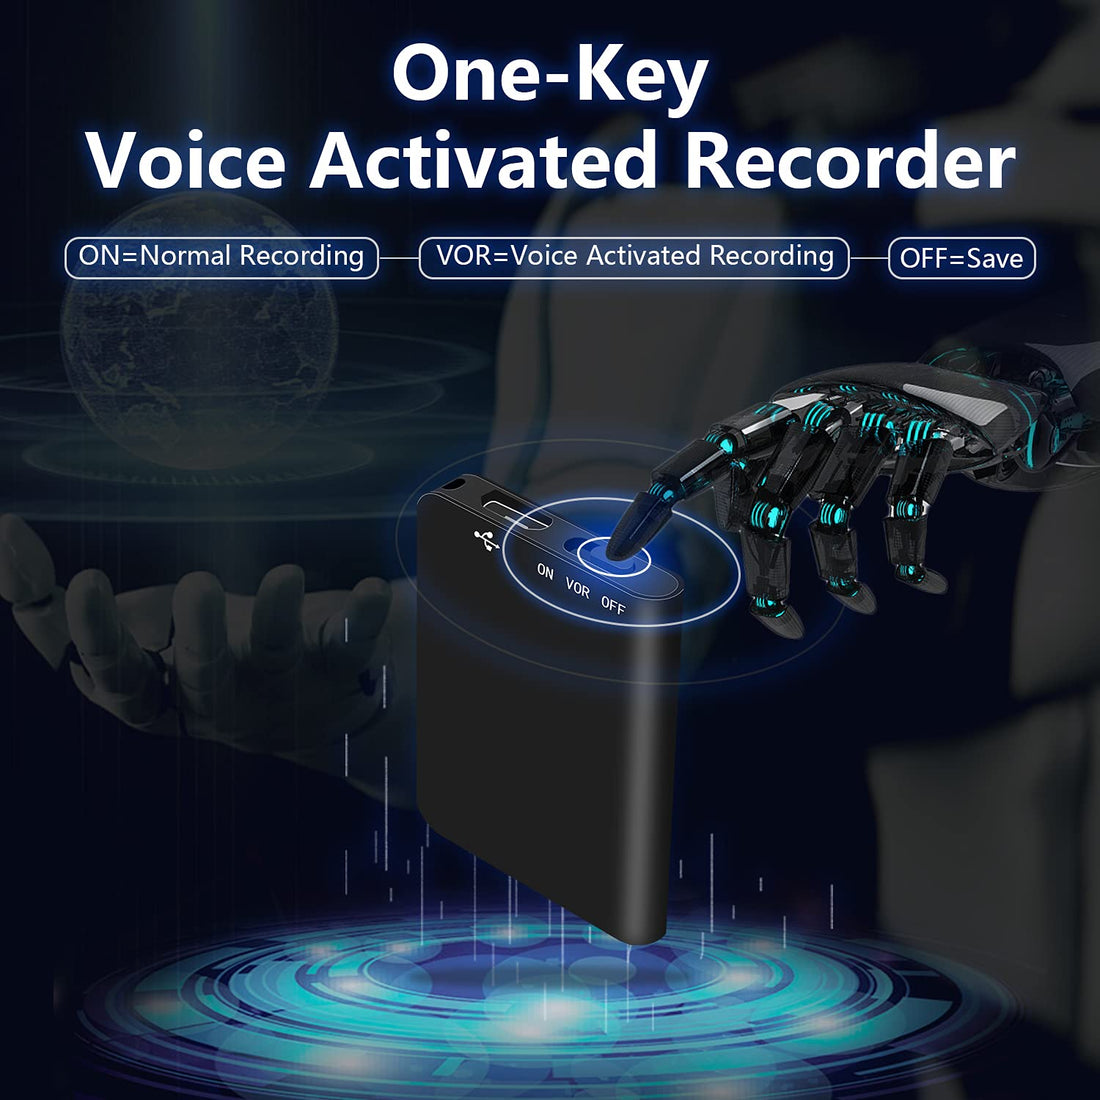 Binrrio Mini Voice Recorder Slim Audio Voice Activated Recorder Small Listening Recording Device, 192 Hours Recording Capacity 3 x 4 x 0.6cm Small Size